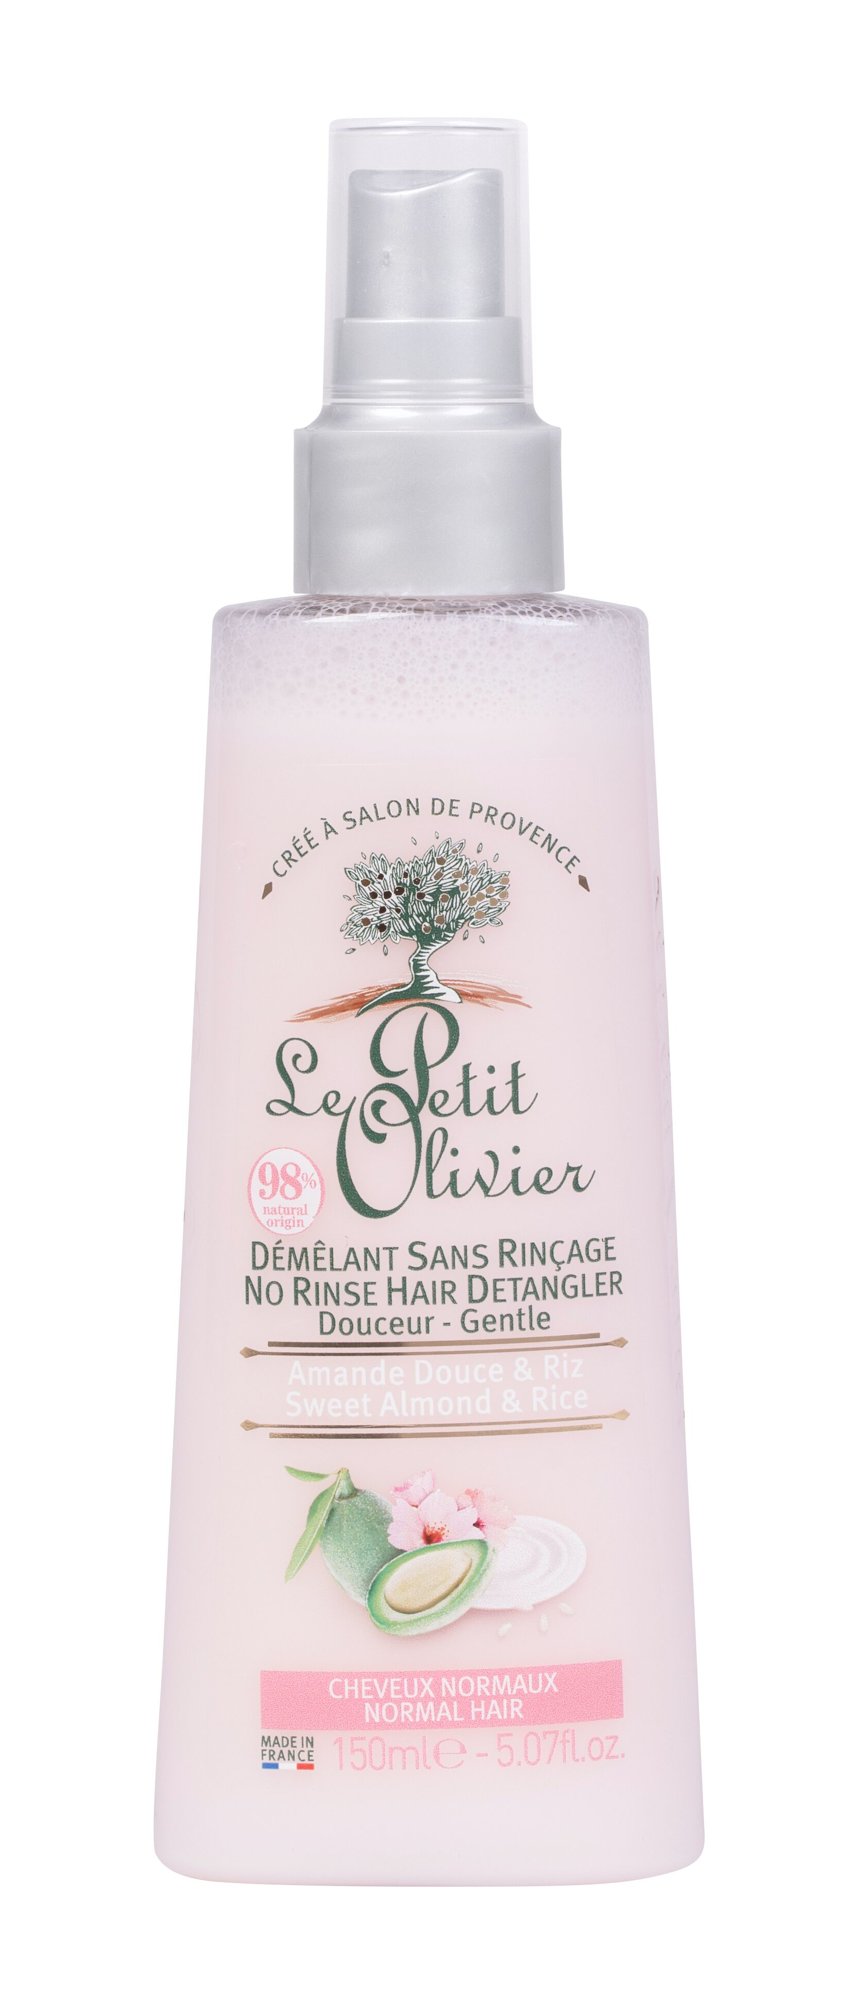 Le Petit Olivier Sweet Almond & Rice Cream